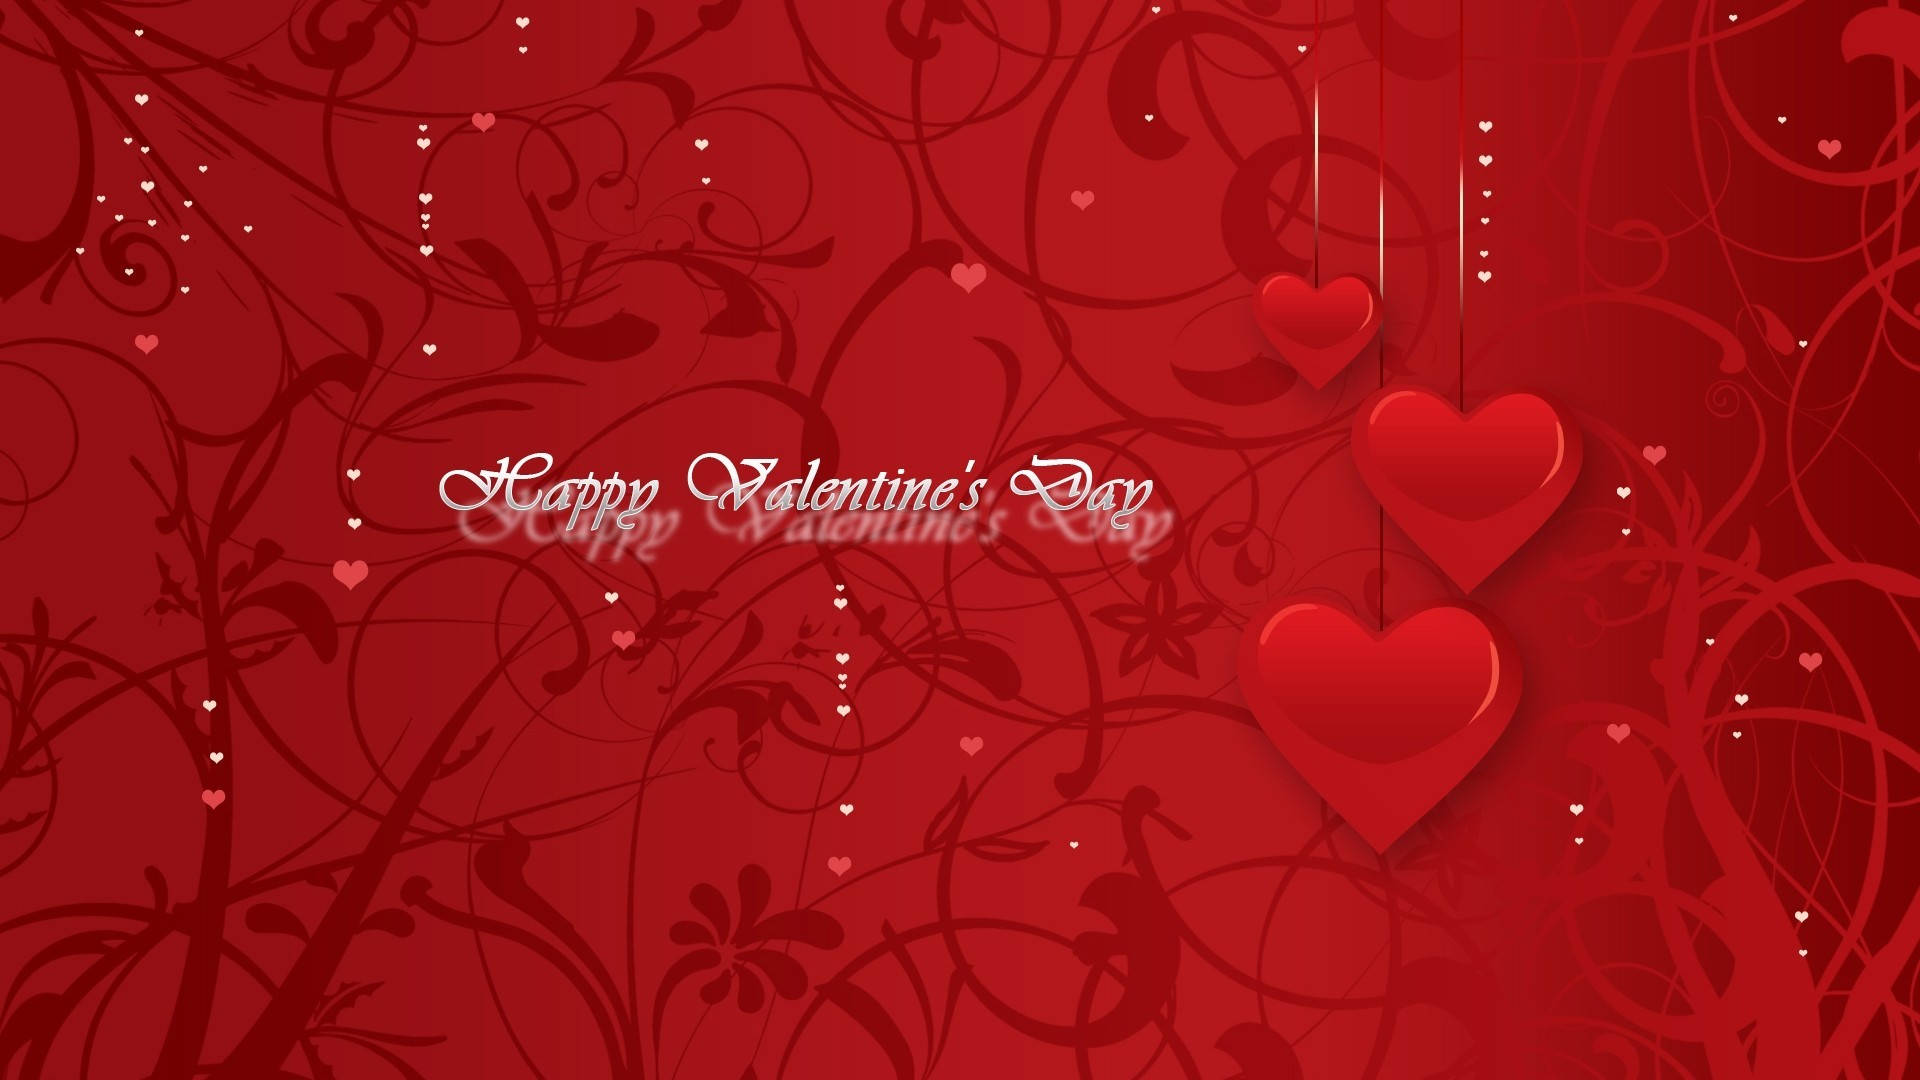 Happy Valentine’s Day Decorative Swirls Background